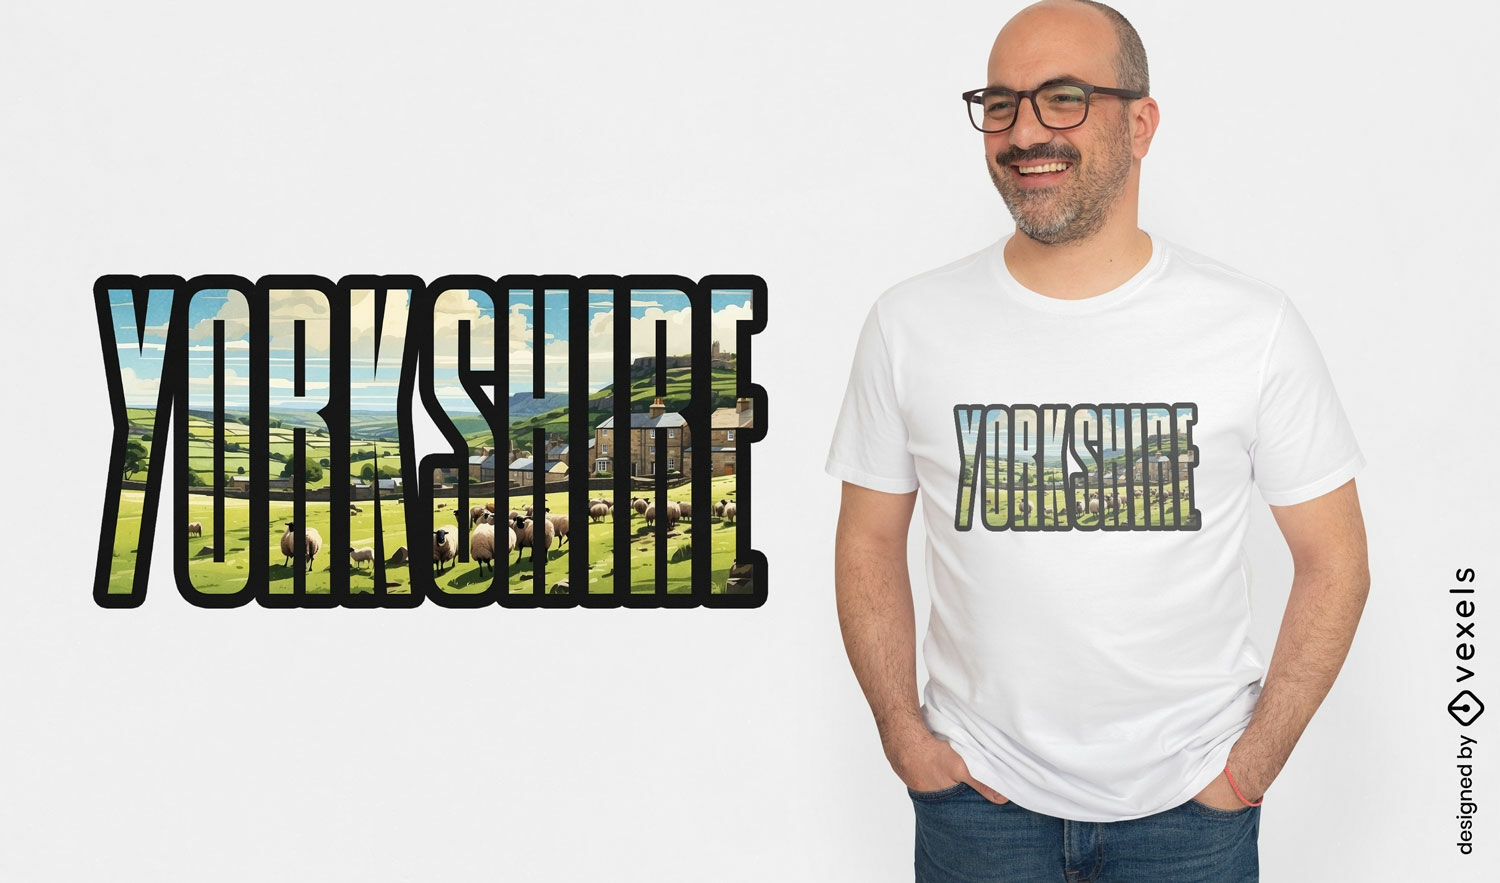 Design de camiseta com slogan de Yorkshire